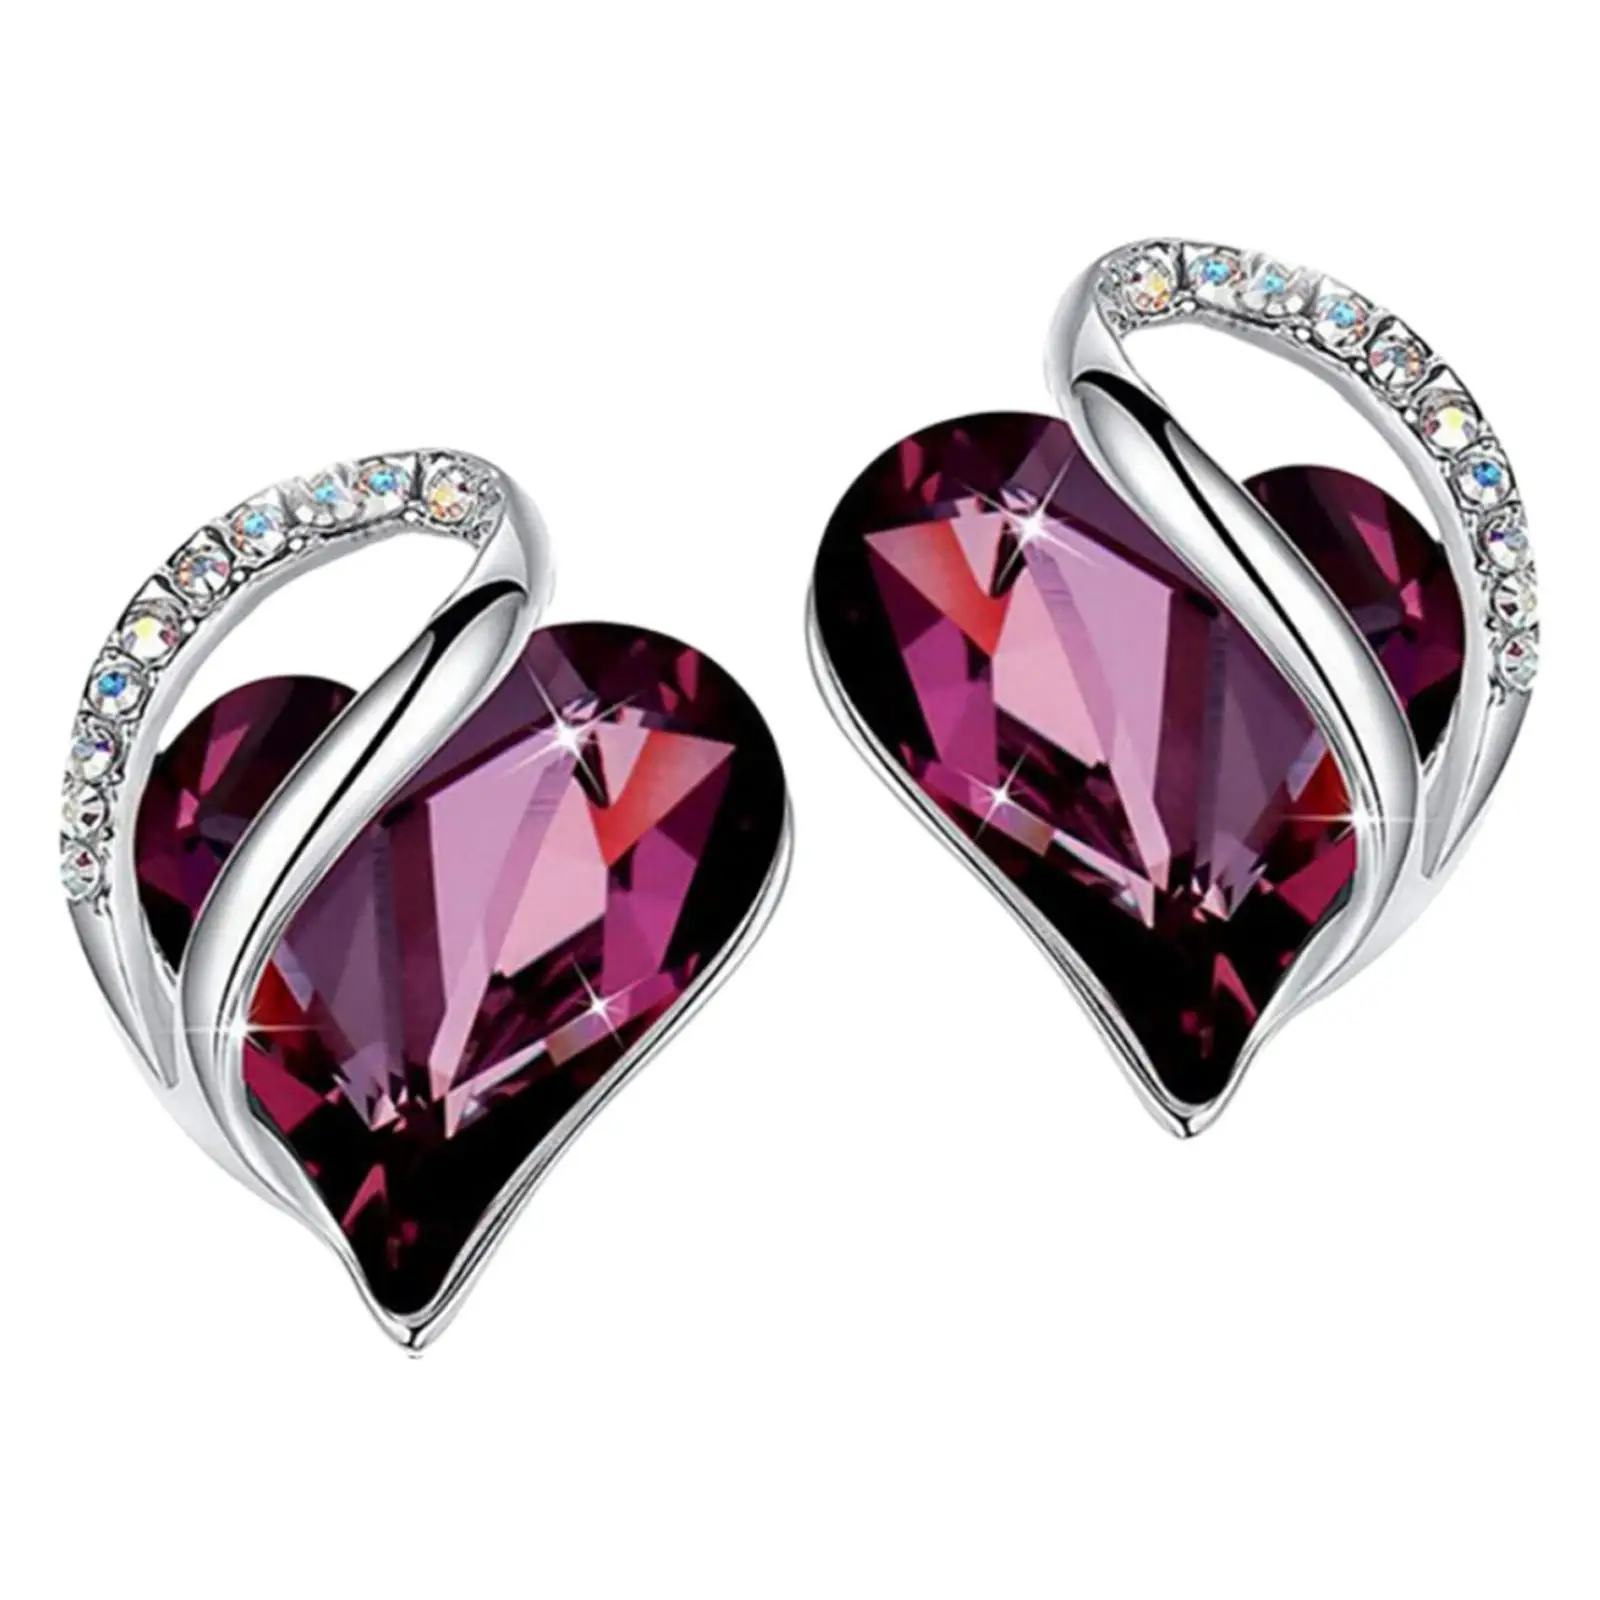 1 Pair Sterling Stud Earrings Fashion Rhinestones Jewelry for Wedding Birthday Women